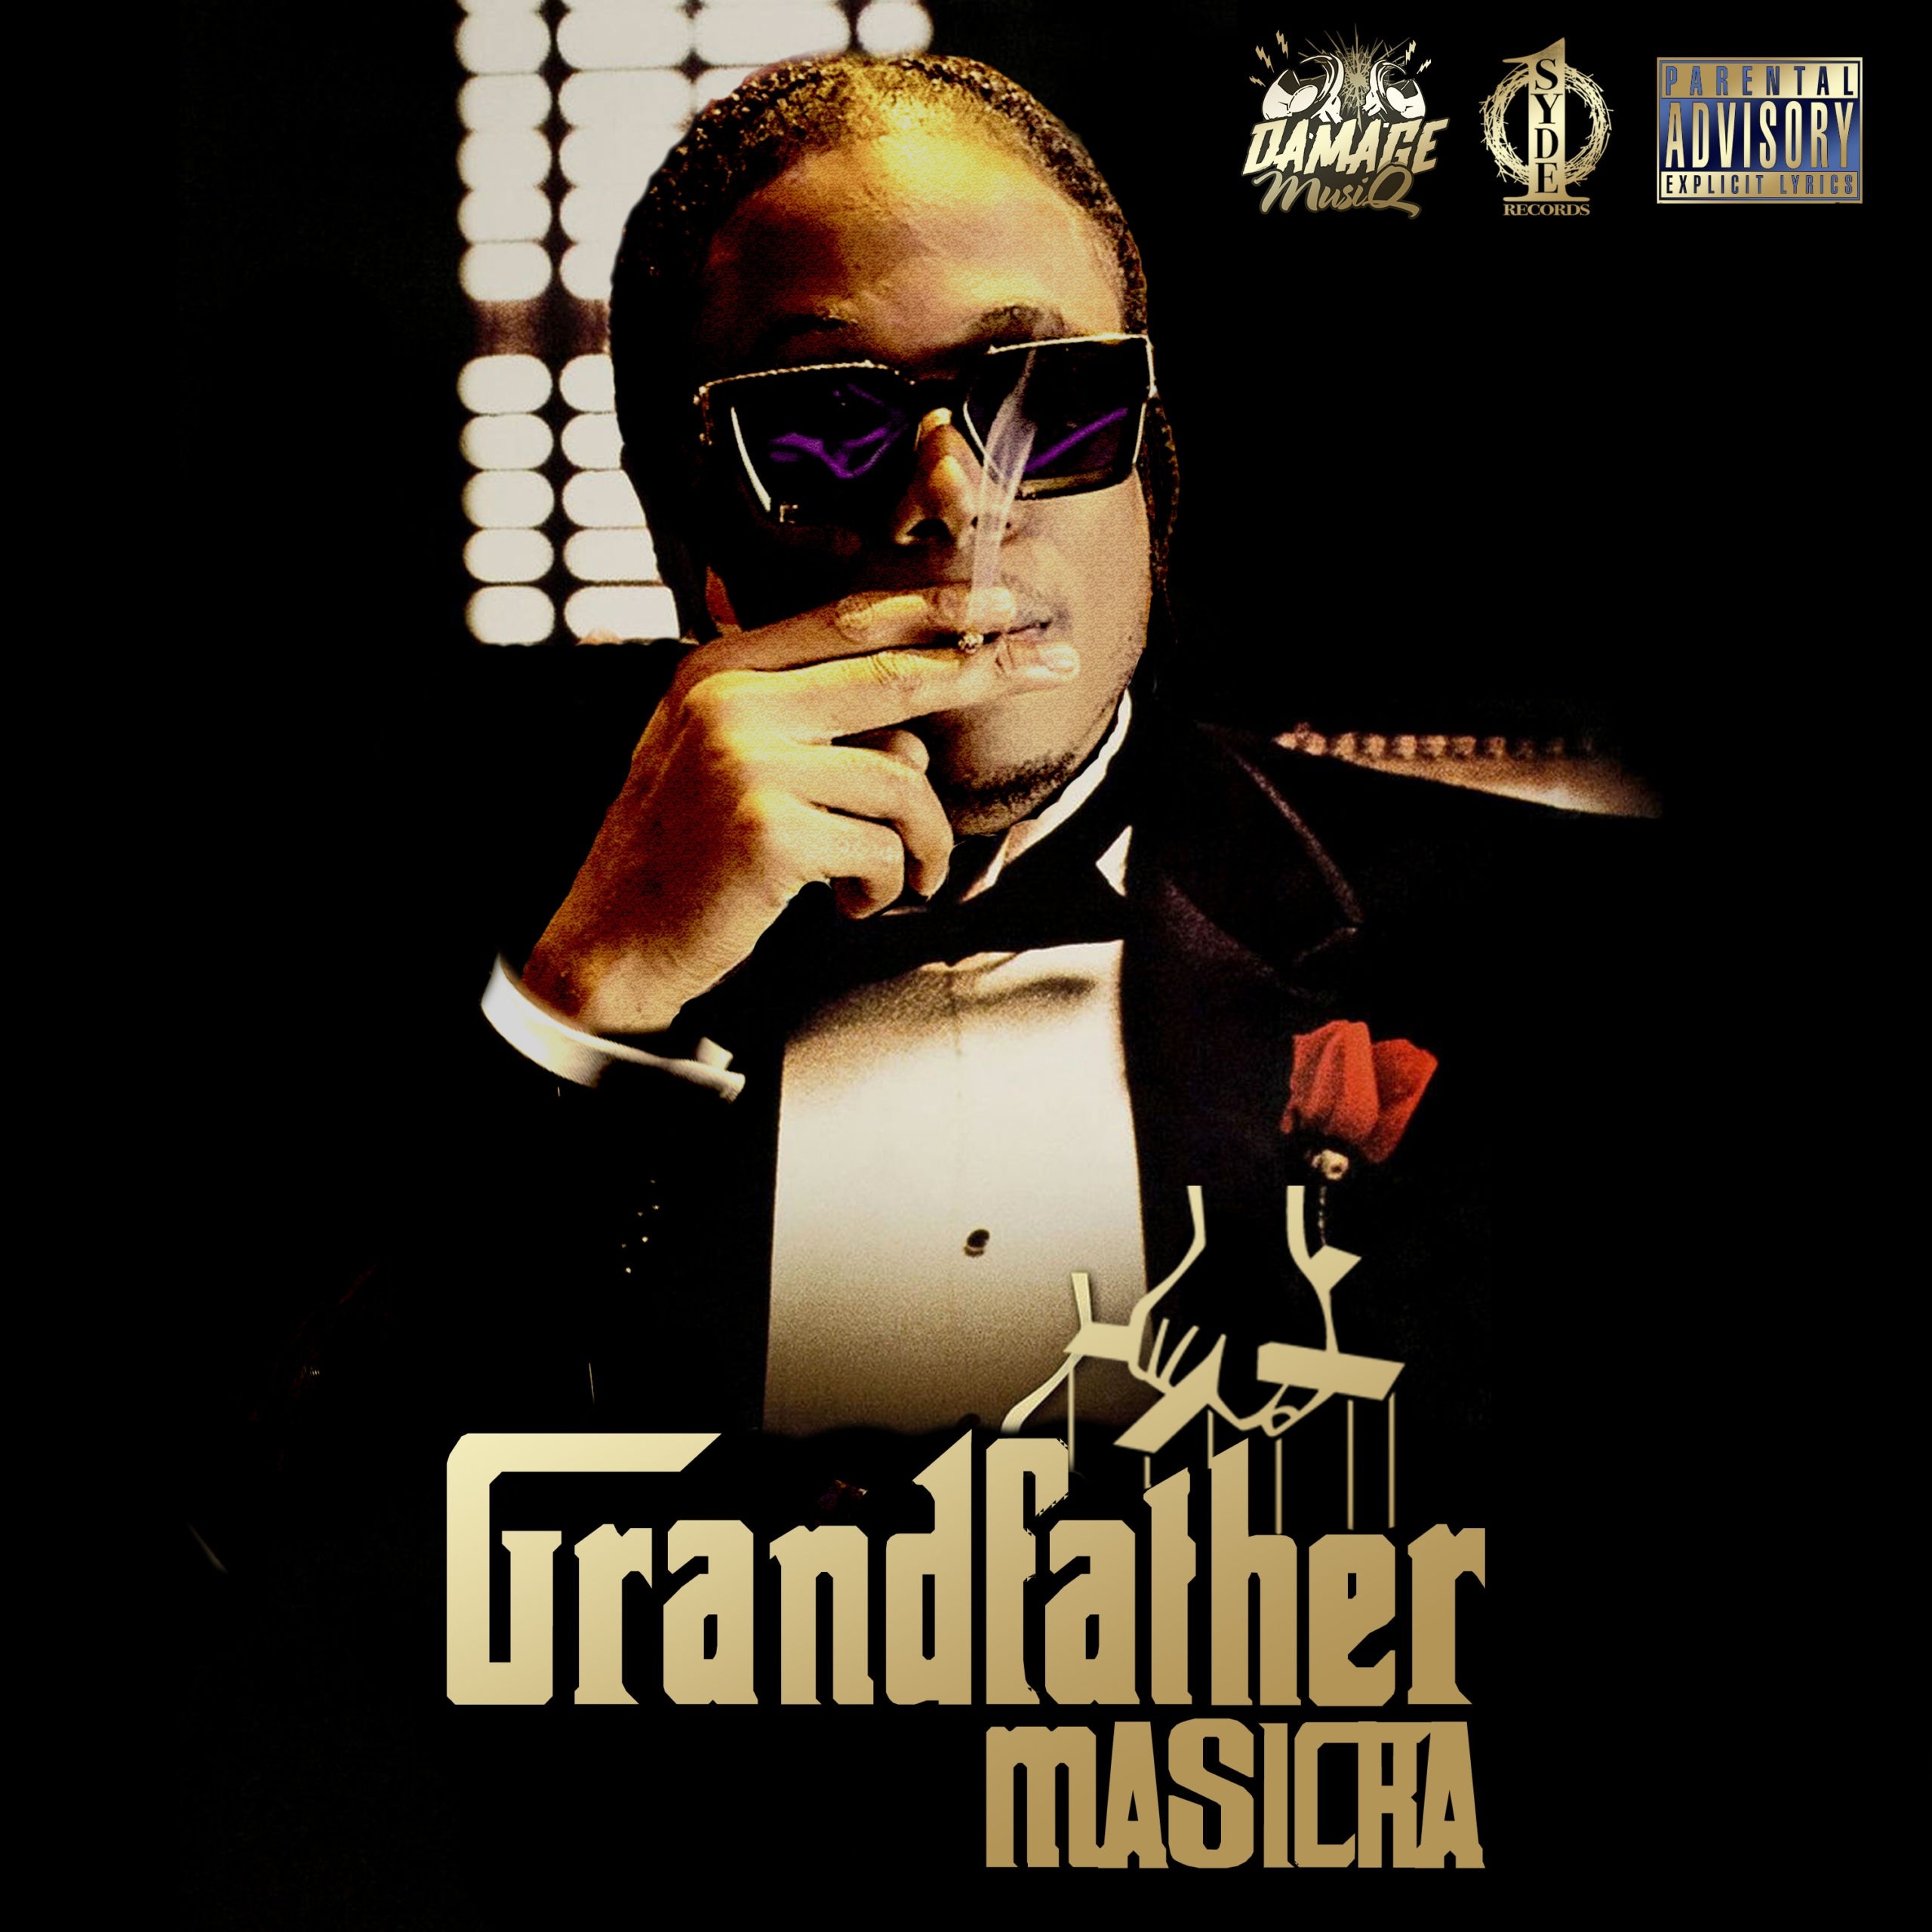 Masicka – Godfather